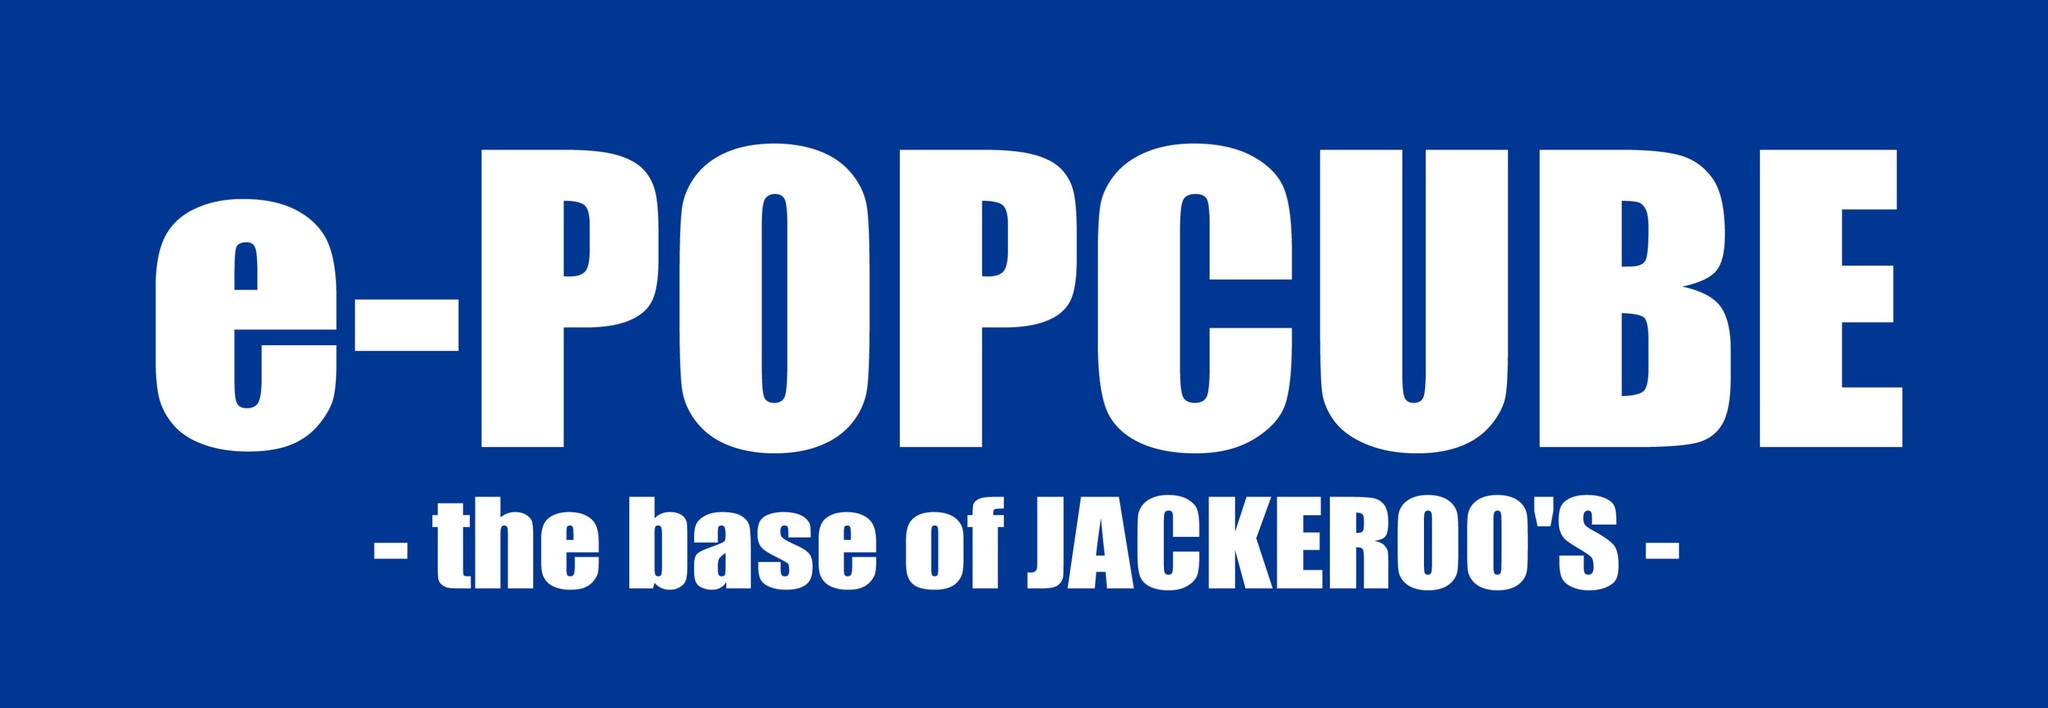 e-POPCUBE（the base of JACKEROOS）